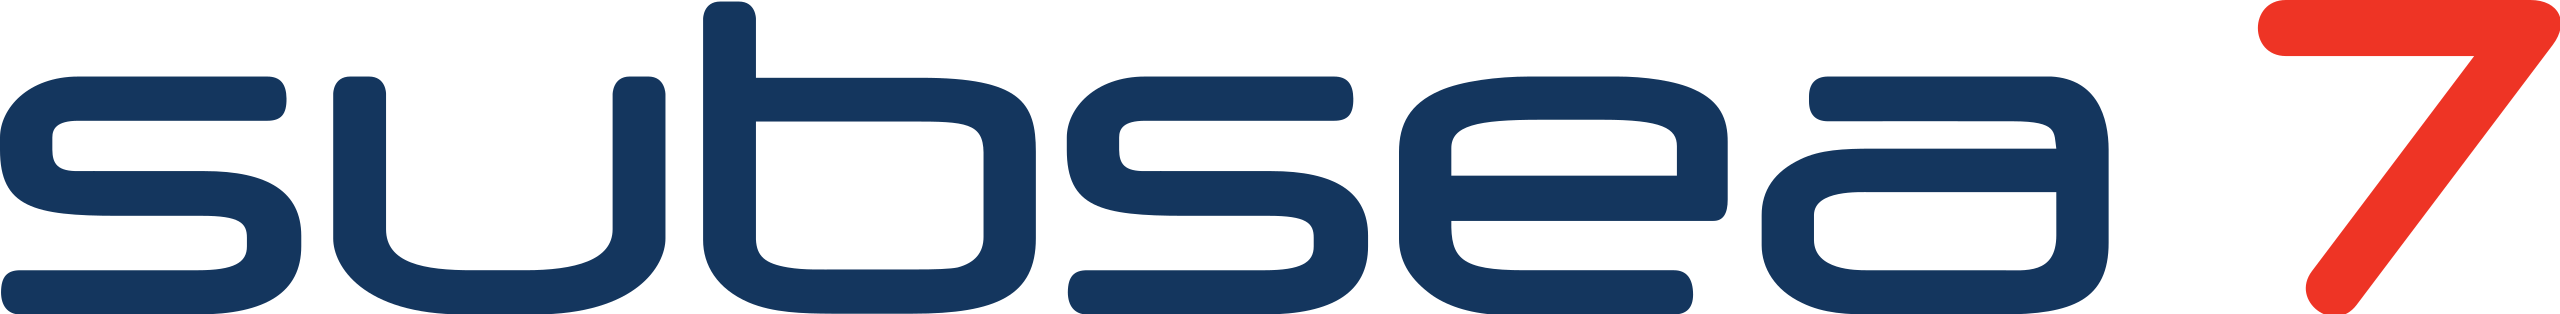 Subsea 7 Brand Logo